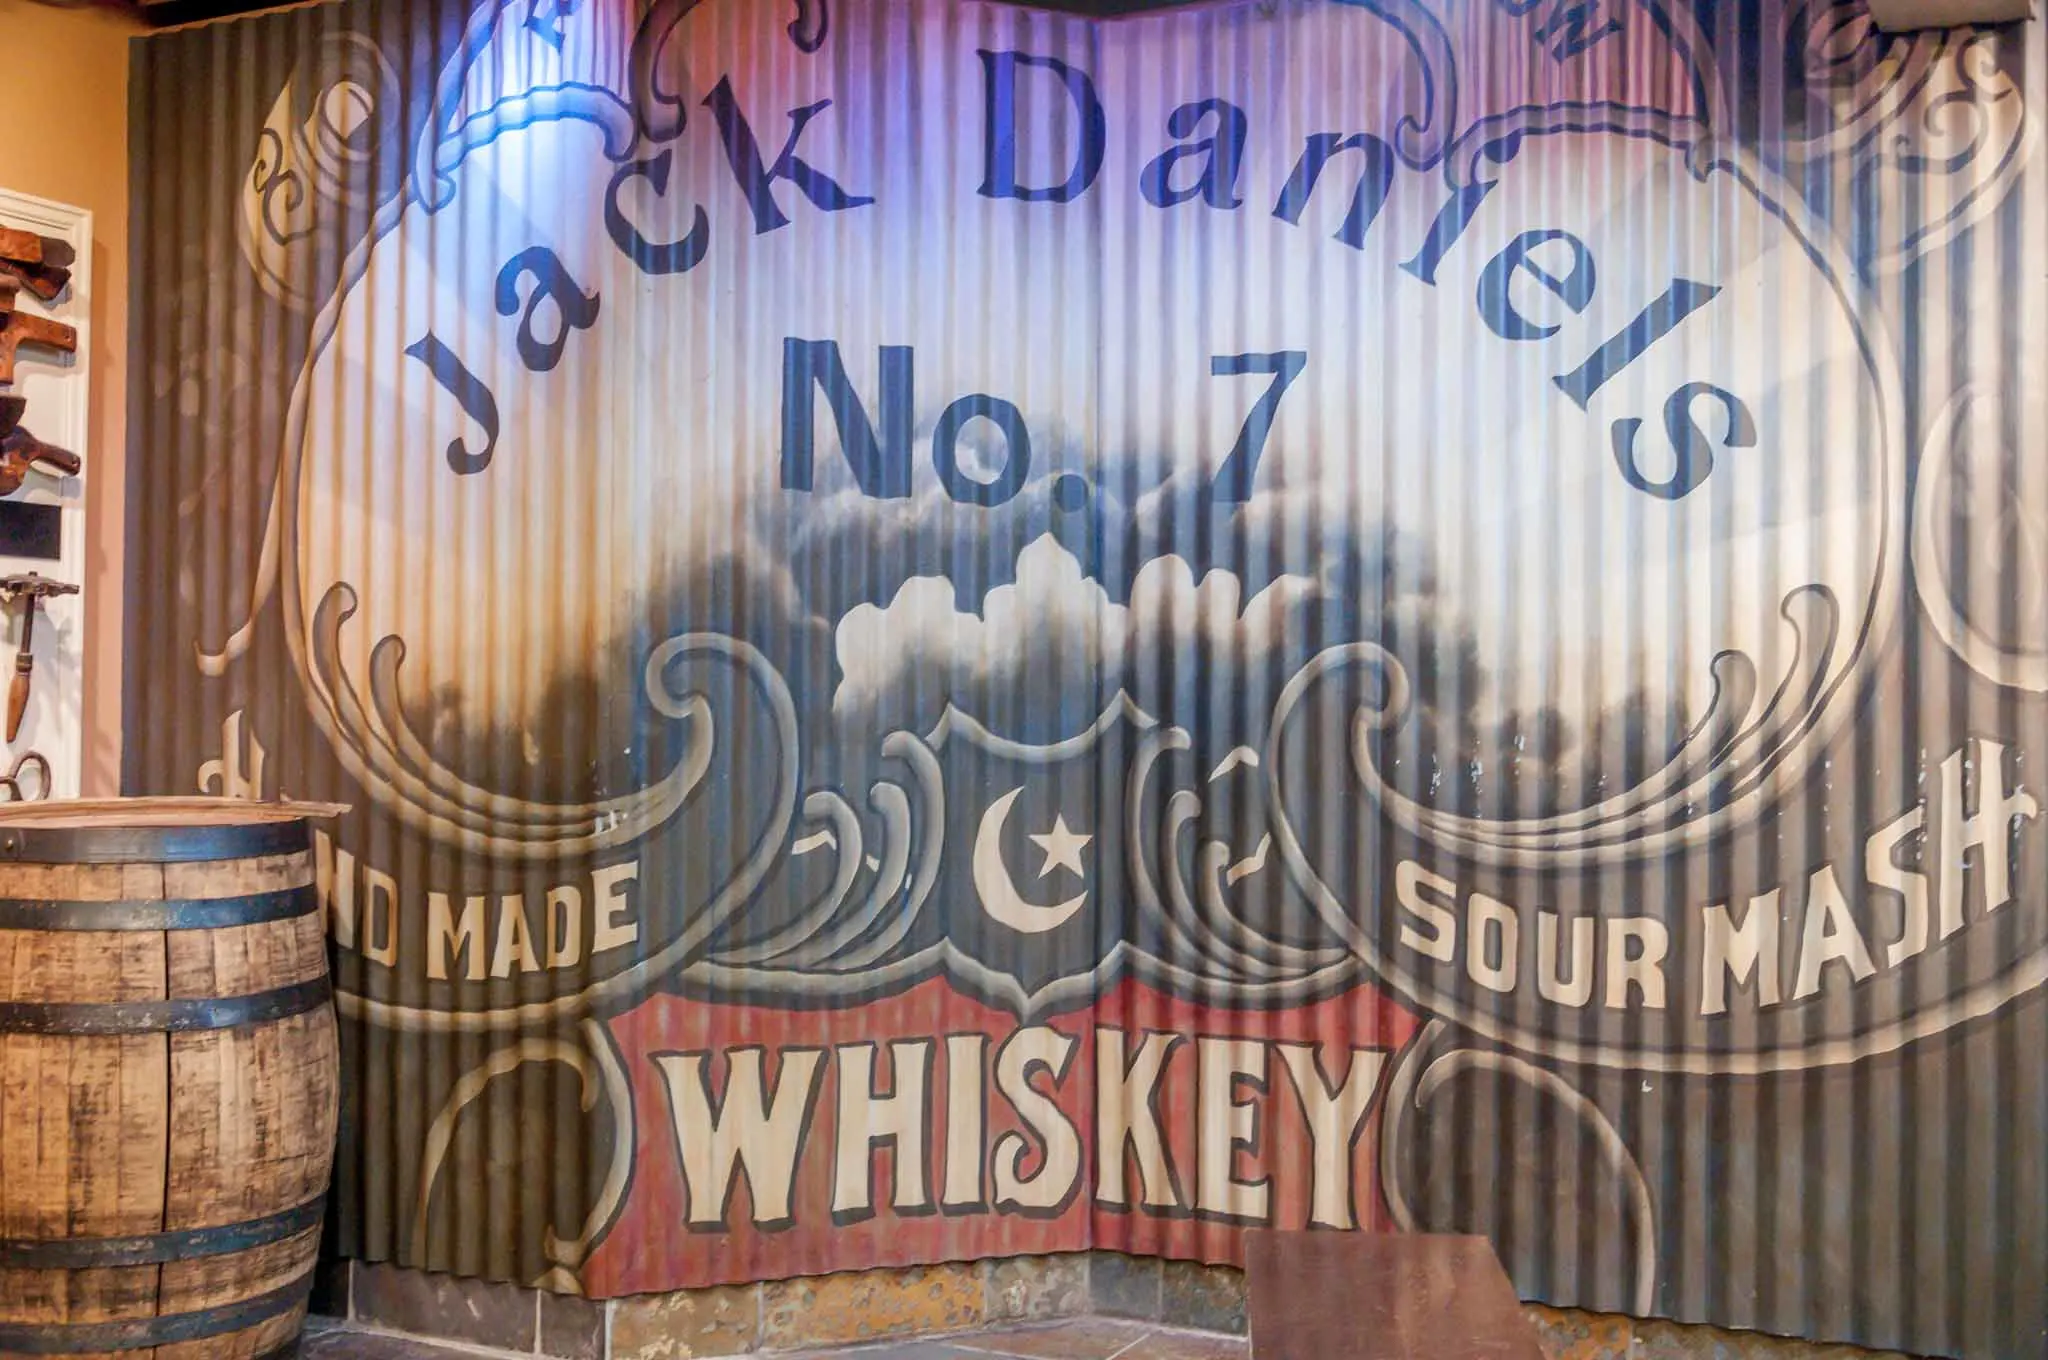 Jack Daniel's No. 7 Whiskey sign